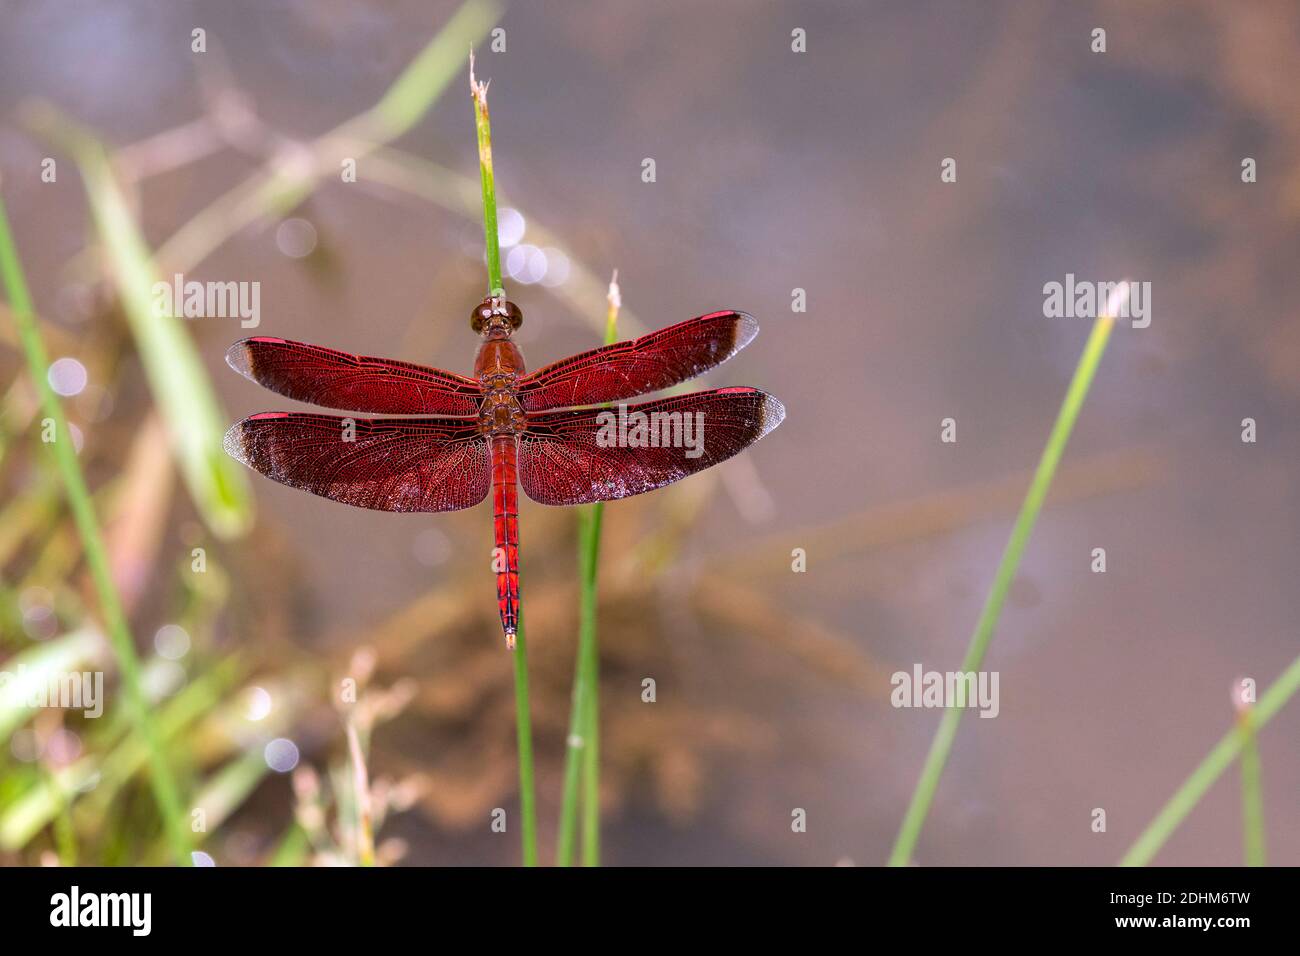 The dragonfly Neurothemis ramburii from Deramakot Forest, Sabah, Borneo Stock Photo